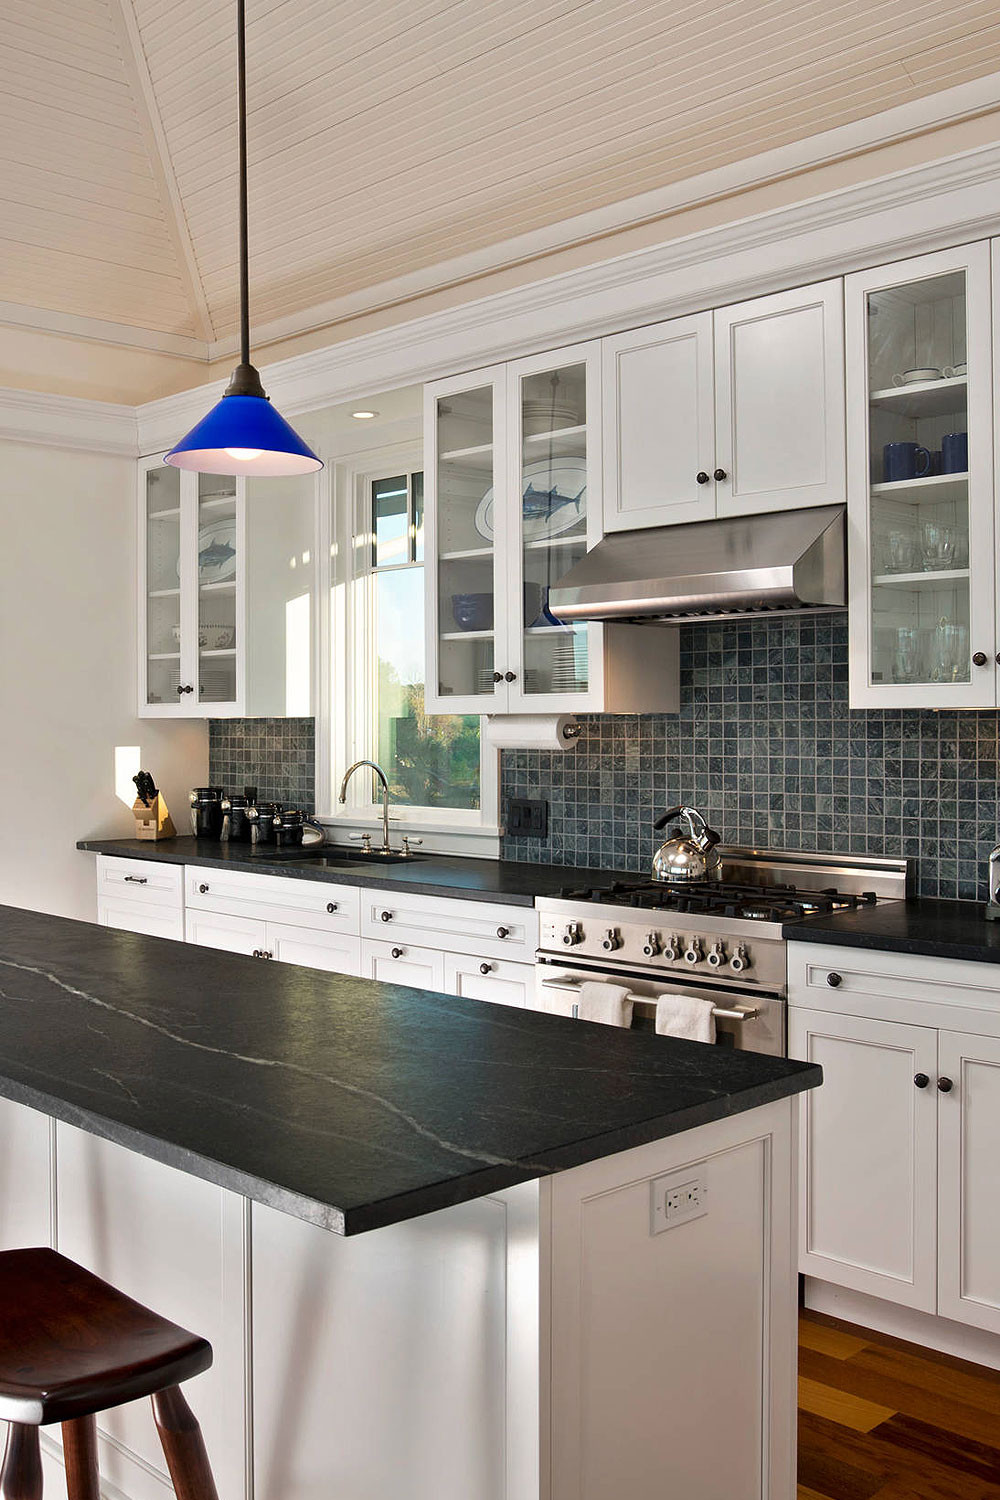 Black Kitchen Countertops With Backsplash
 50 Black Countertop Backsplash Ideas Tile Designs Tips